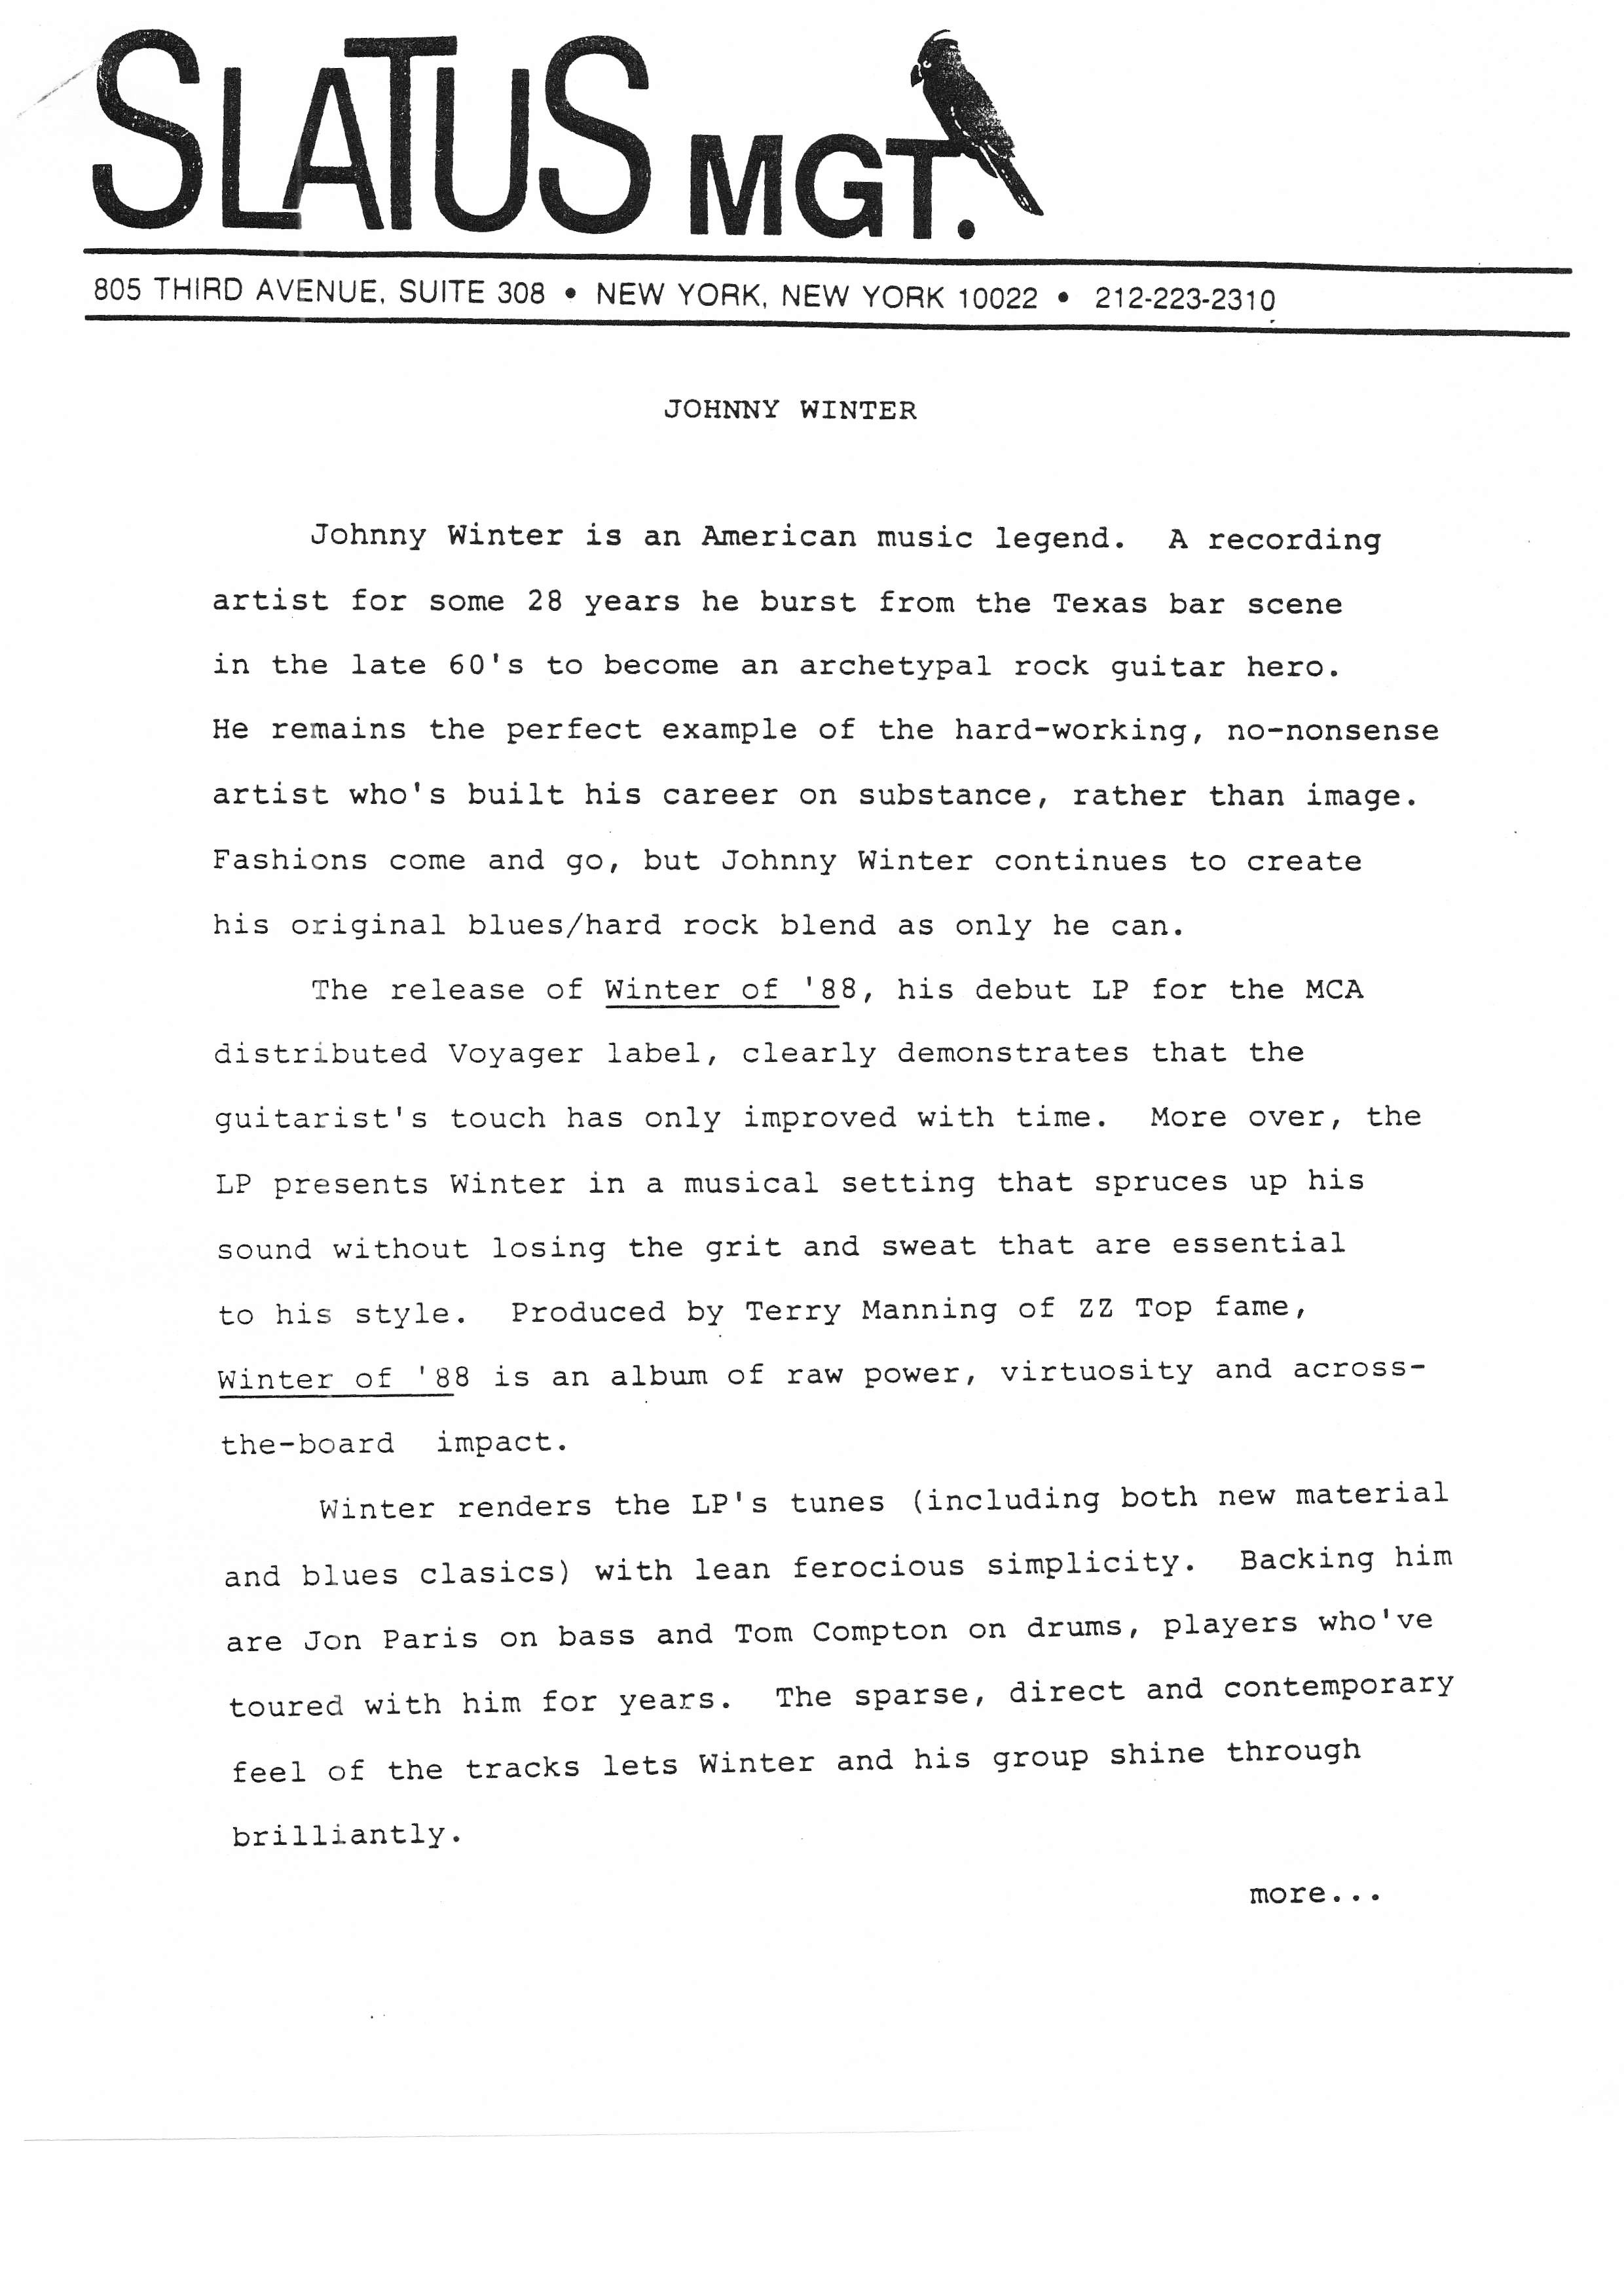 Press release of "Winter of '88" incl Johnny Winter career description, by Slatus Management Part I/V